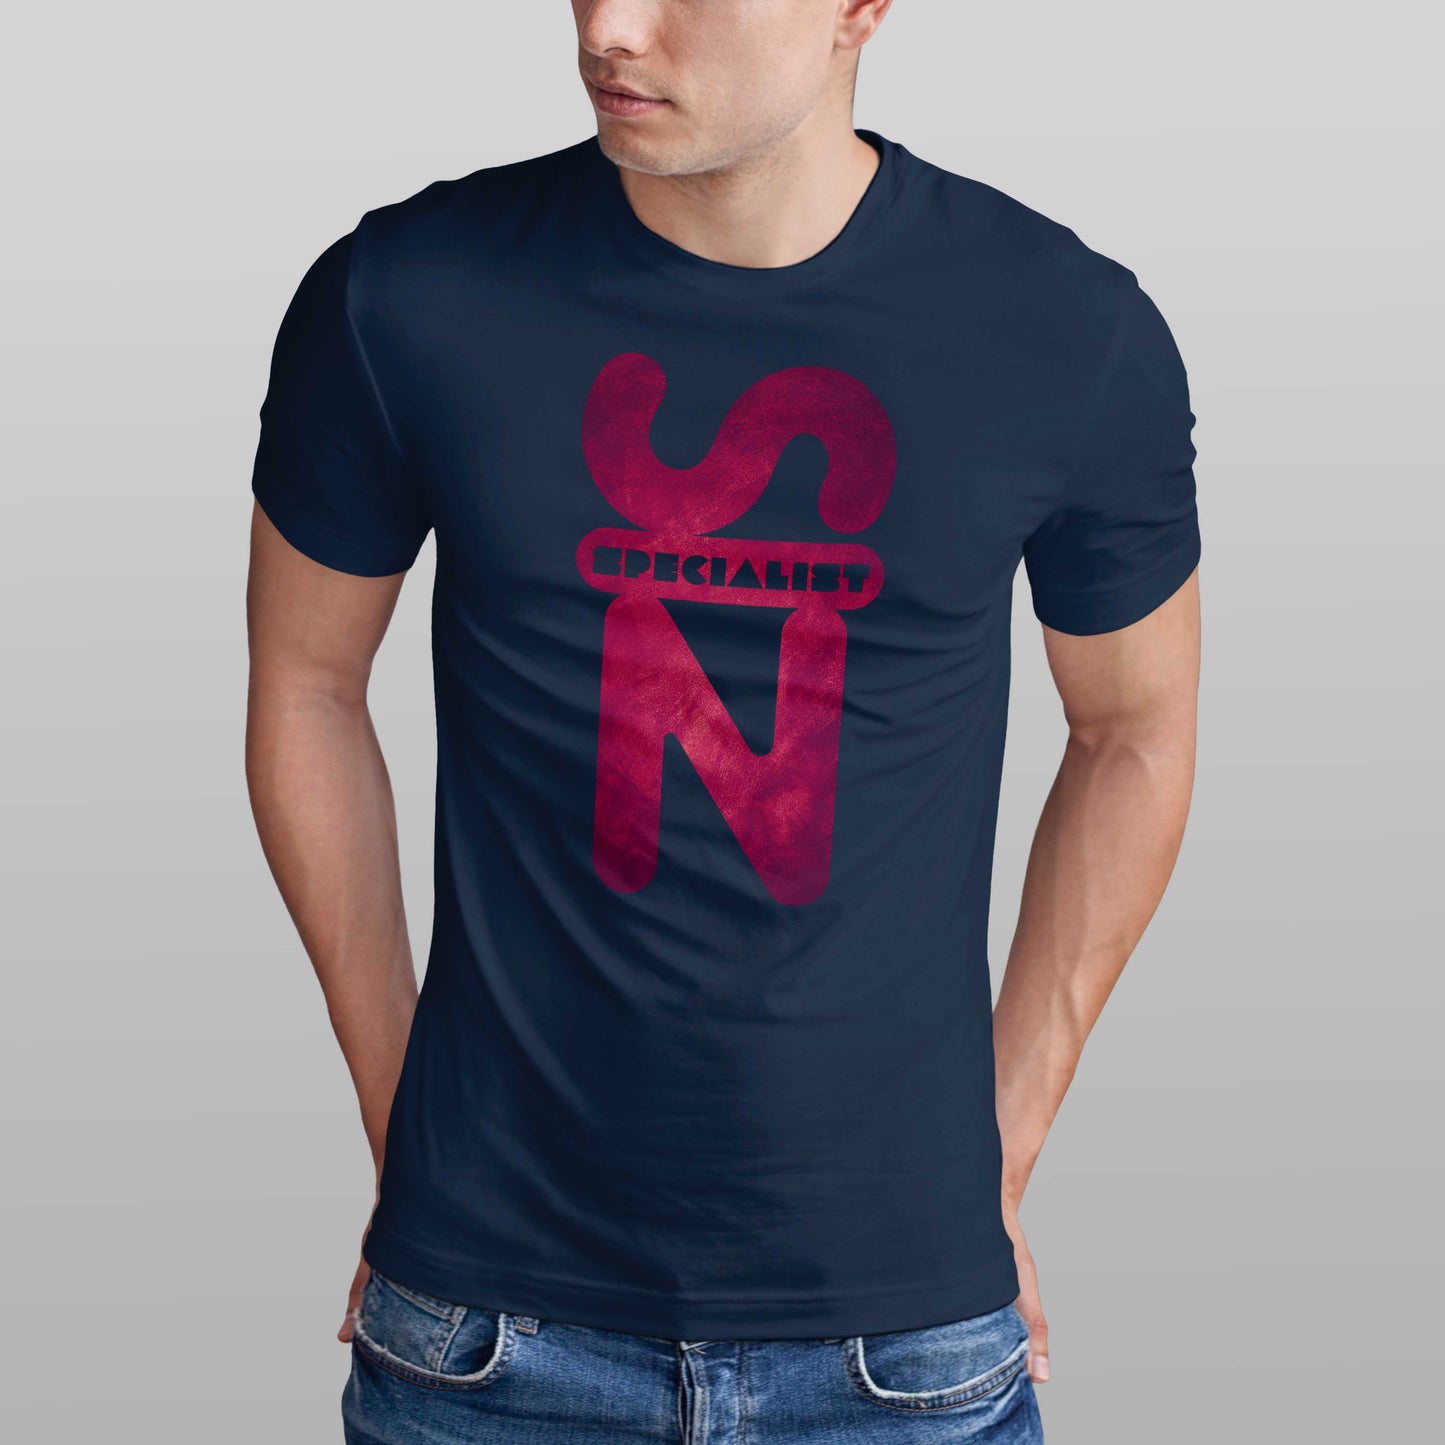 Sin Specialist Men's T-shirt (Magenta)